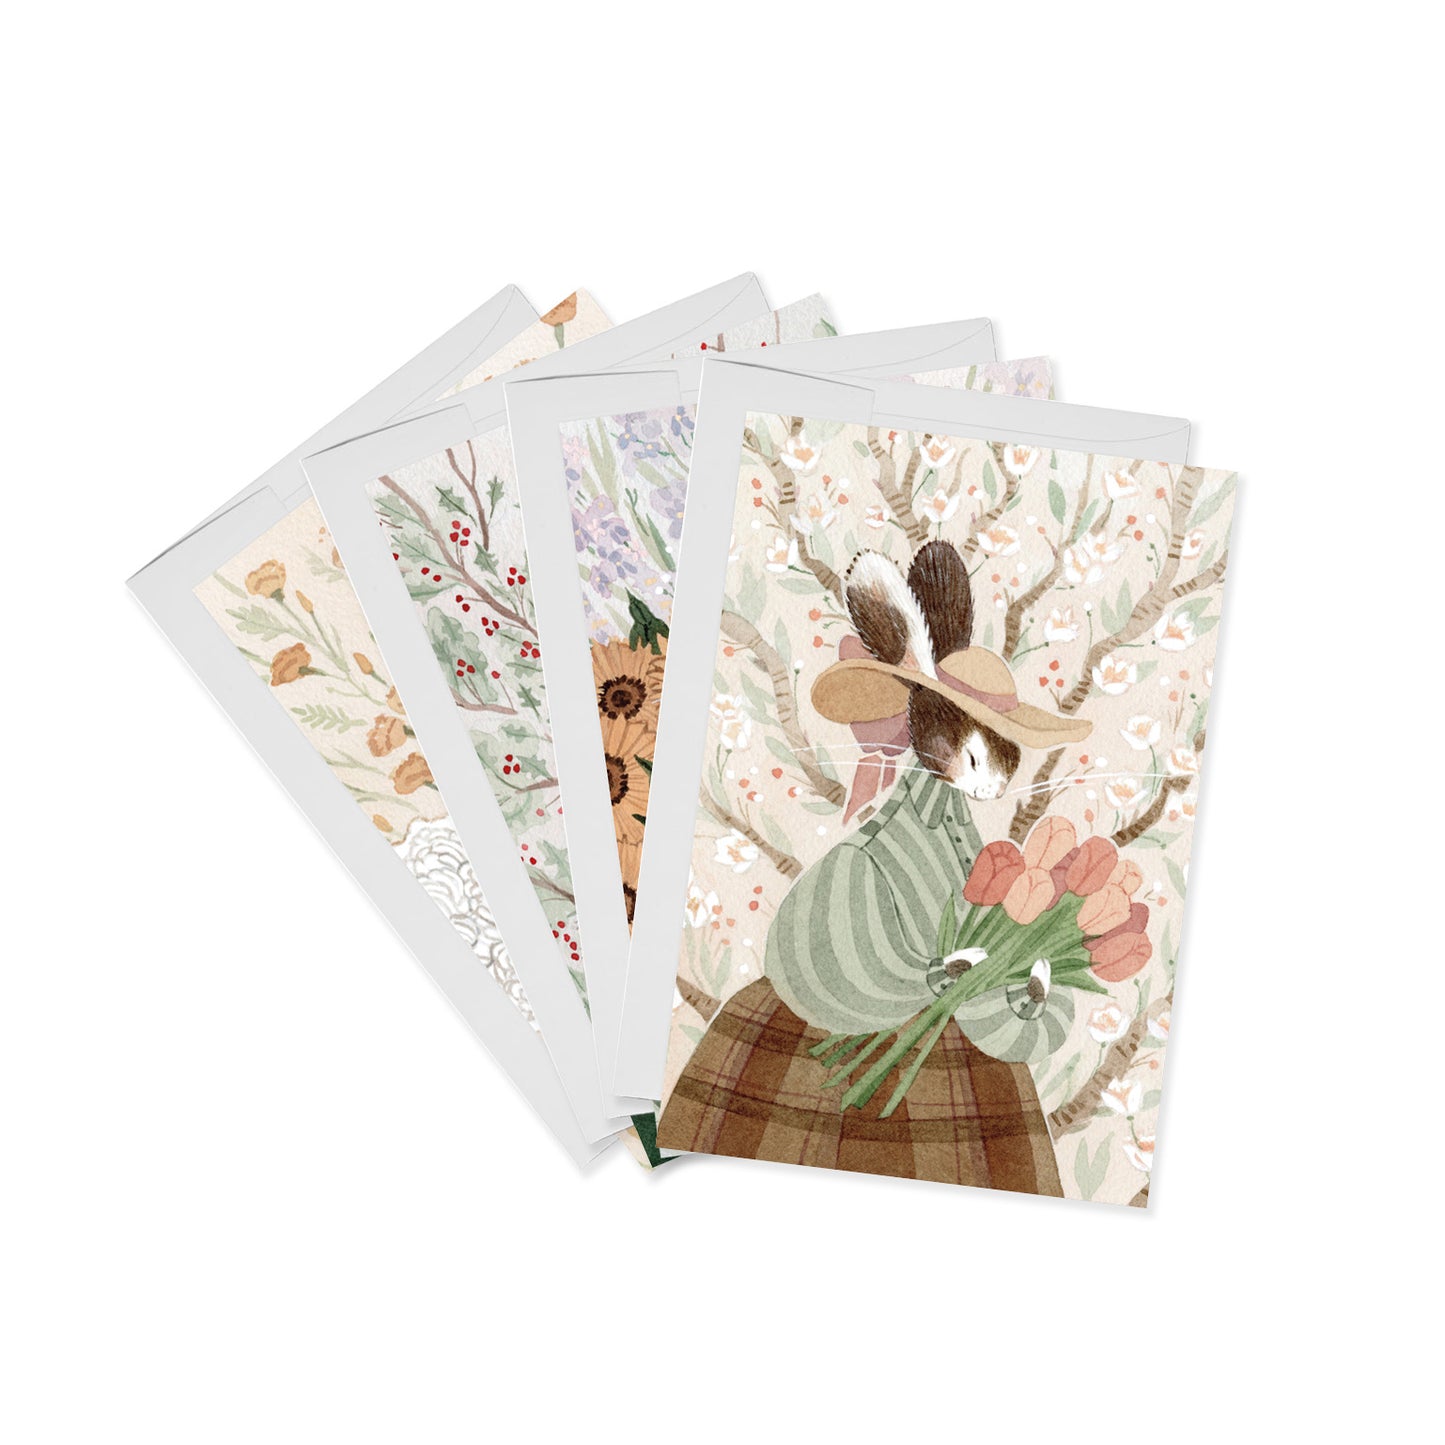 Vanessa Gillings - 4 Seasons (Set of 4 Greeting Cards)